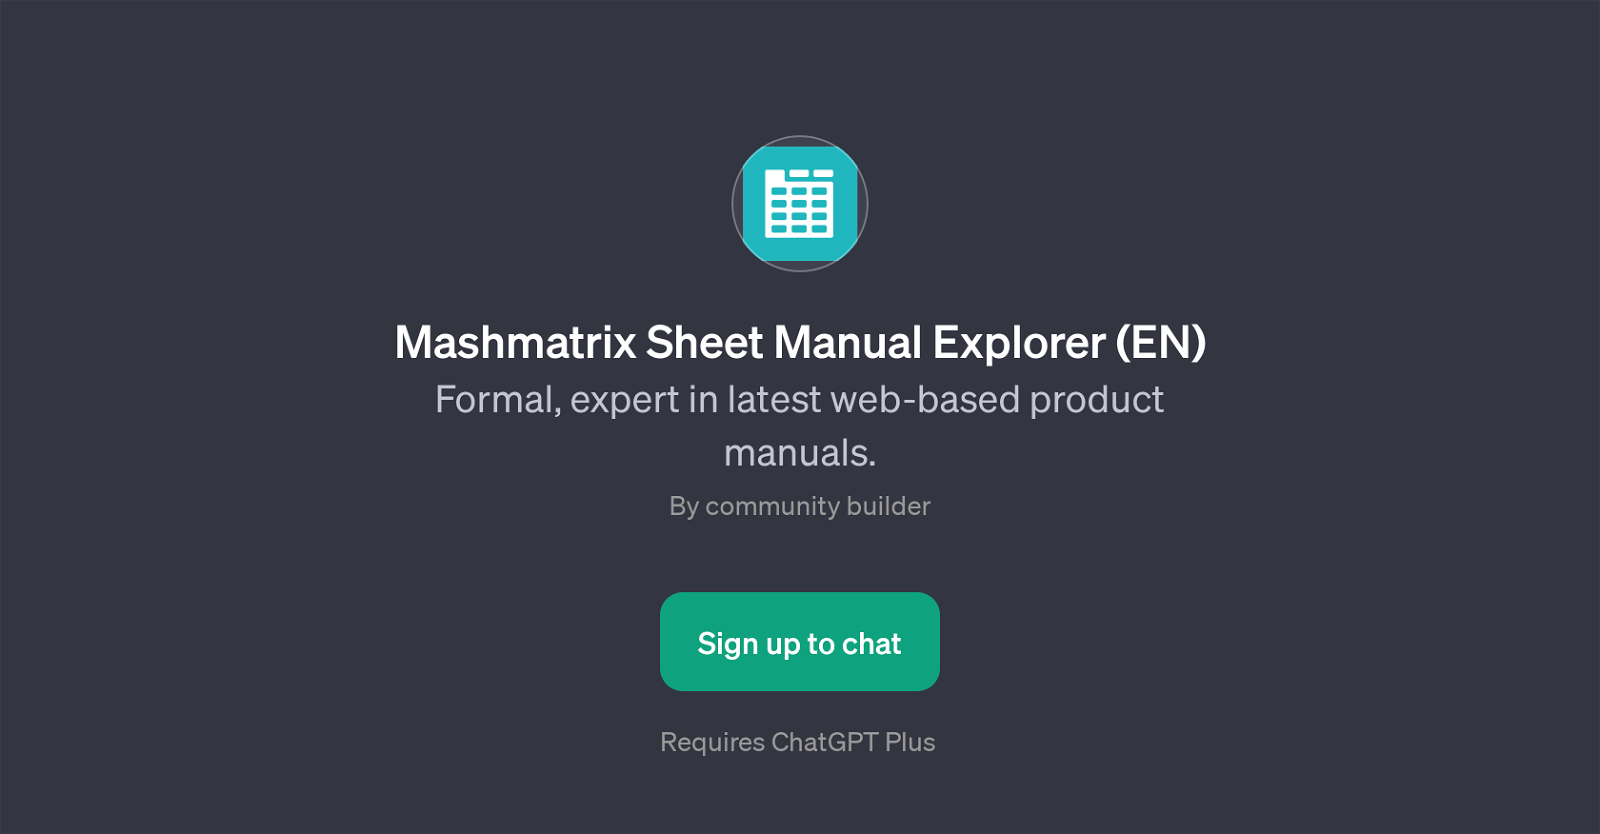 Mashmatrix Sheet Manual Explorer website